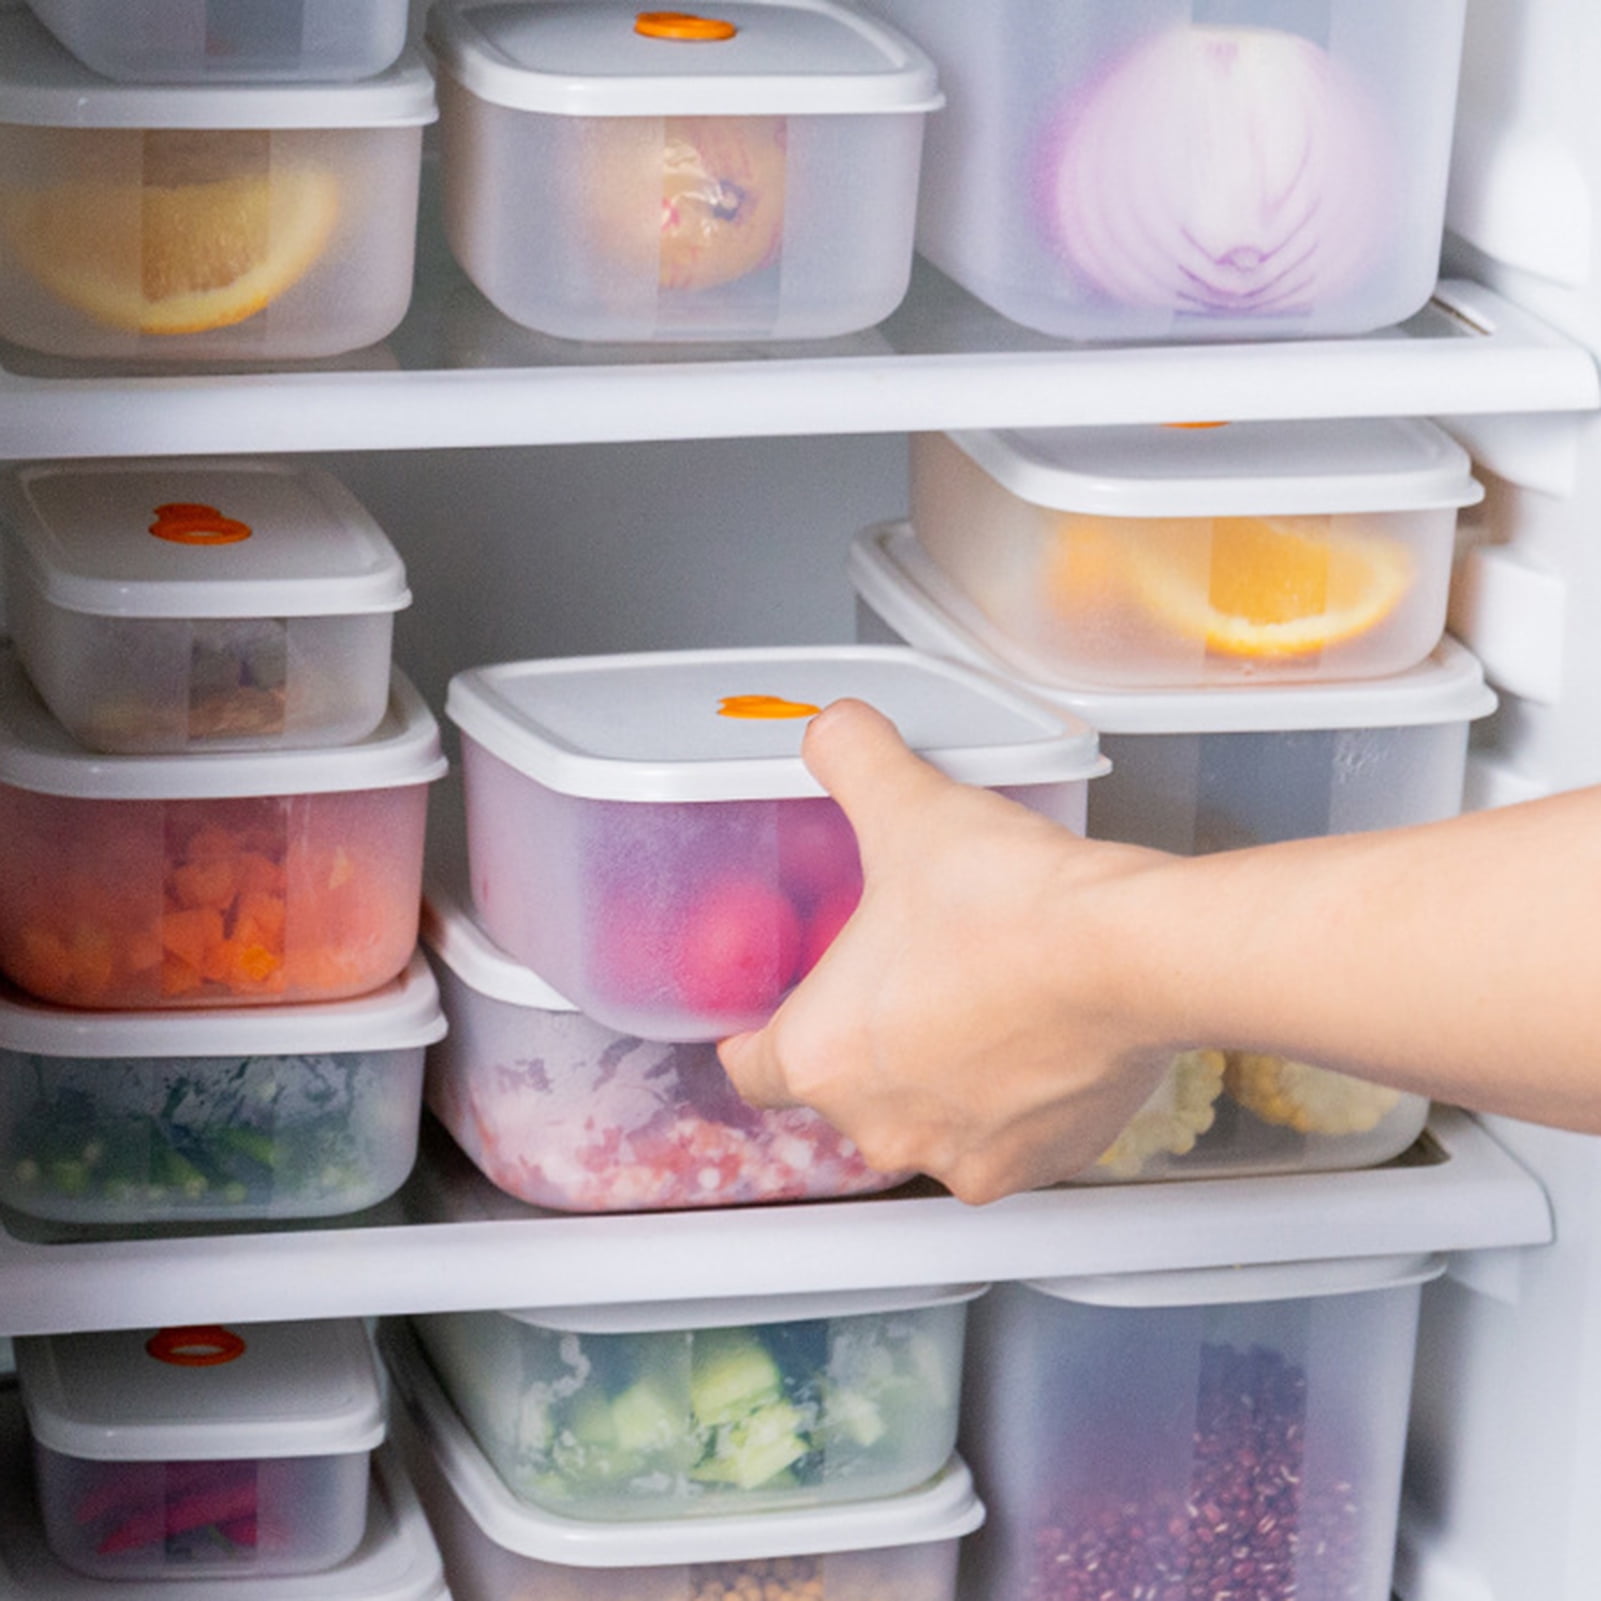 Details about   1x Refrigerator Organizer Bins Clear Plastic Pantry Food Storage Racks Holders 